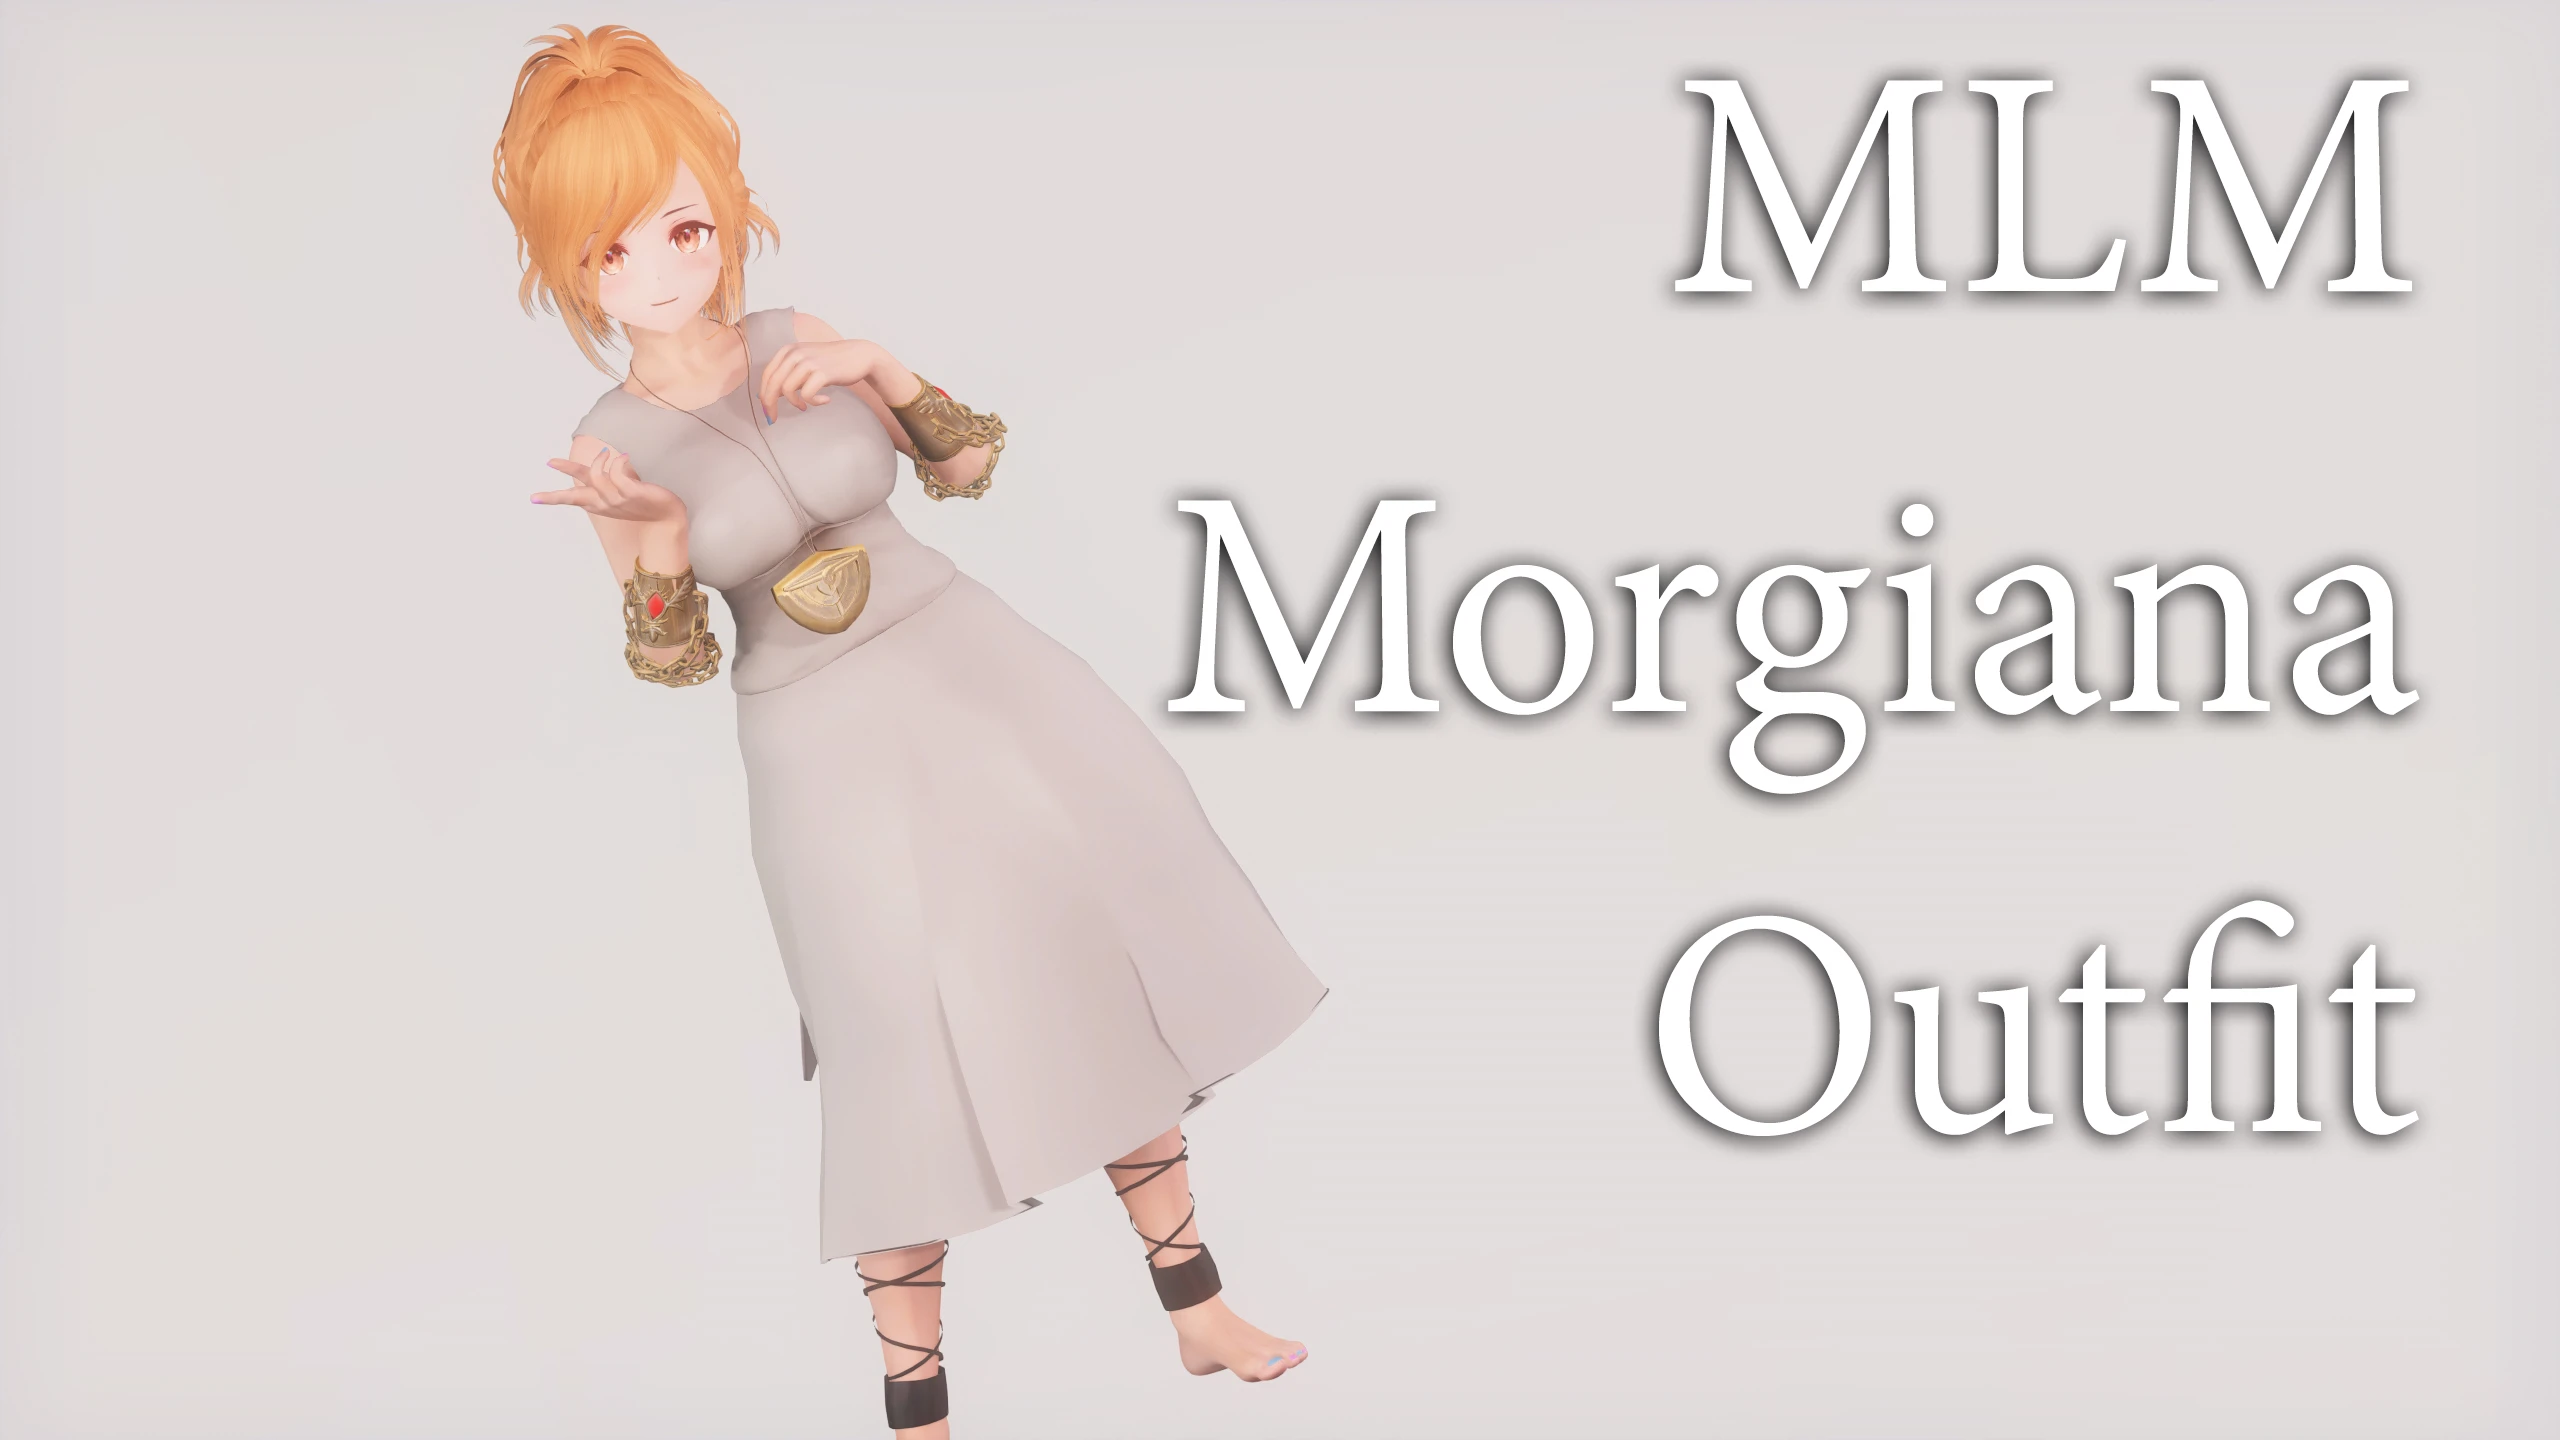 MLM Morgiana Outfit